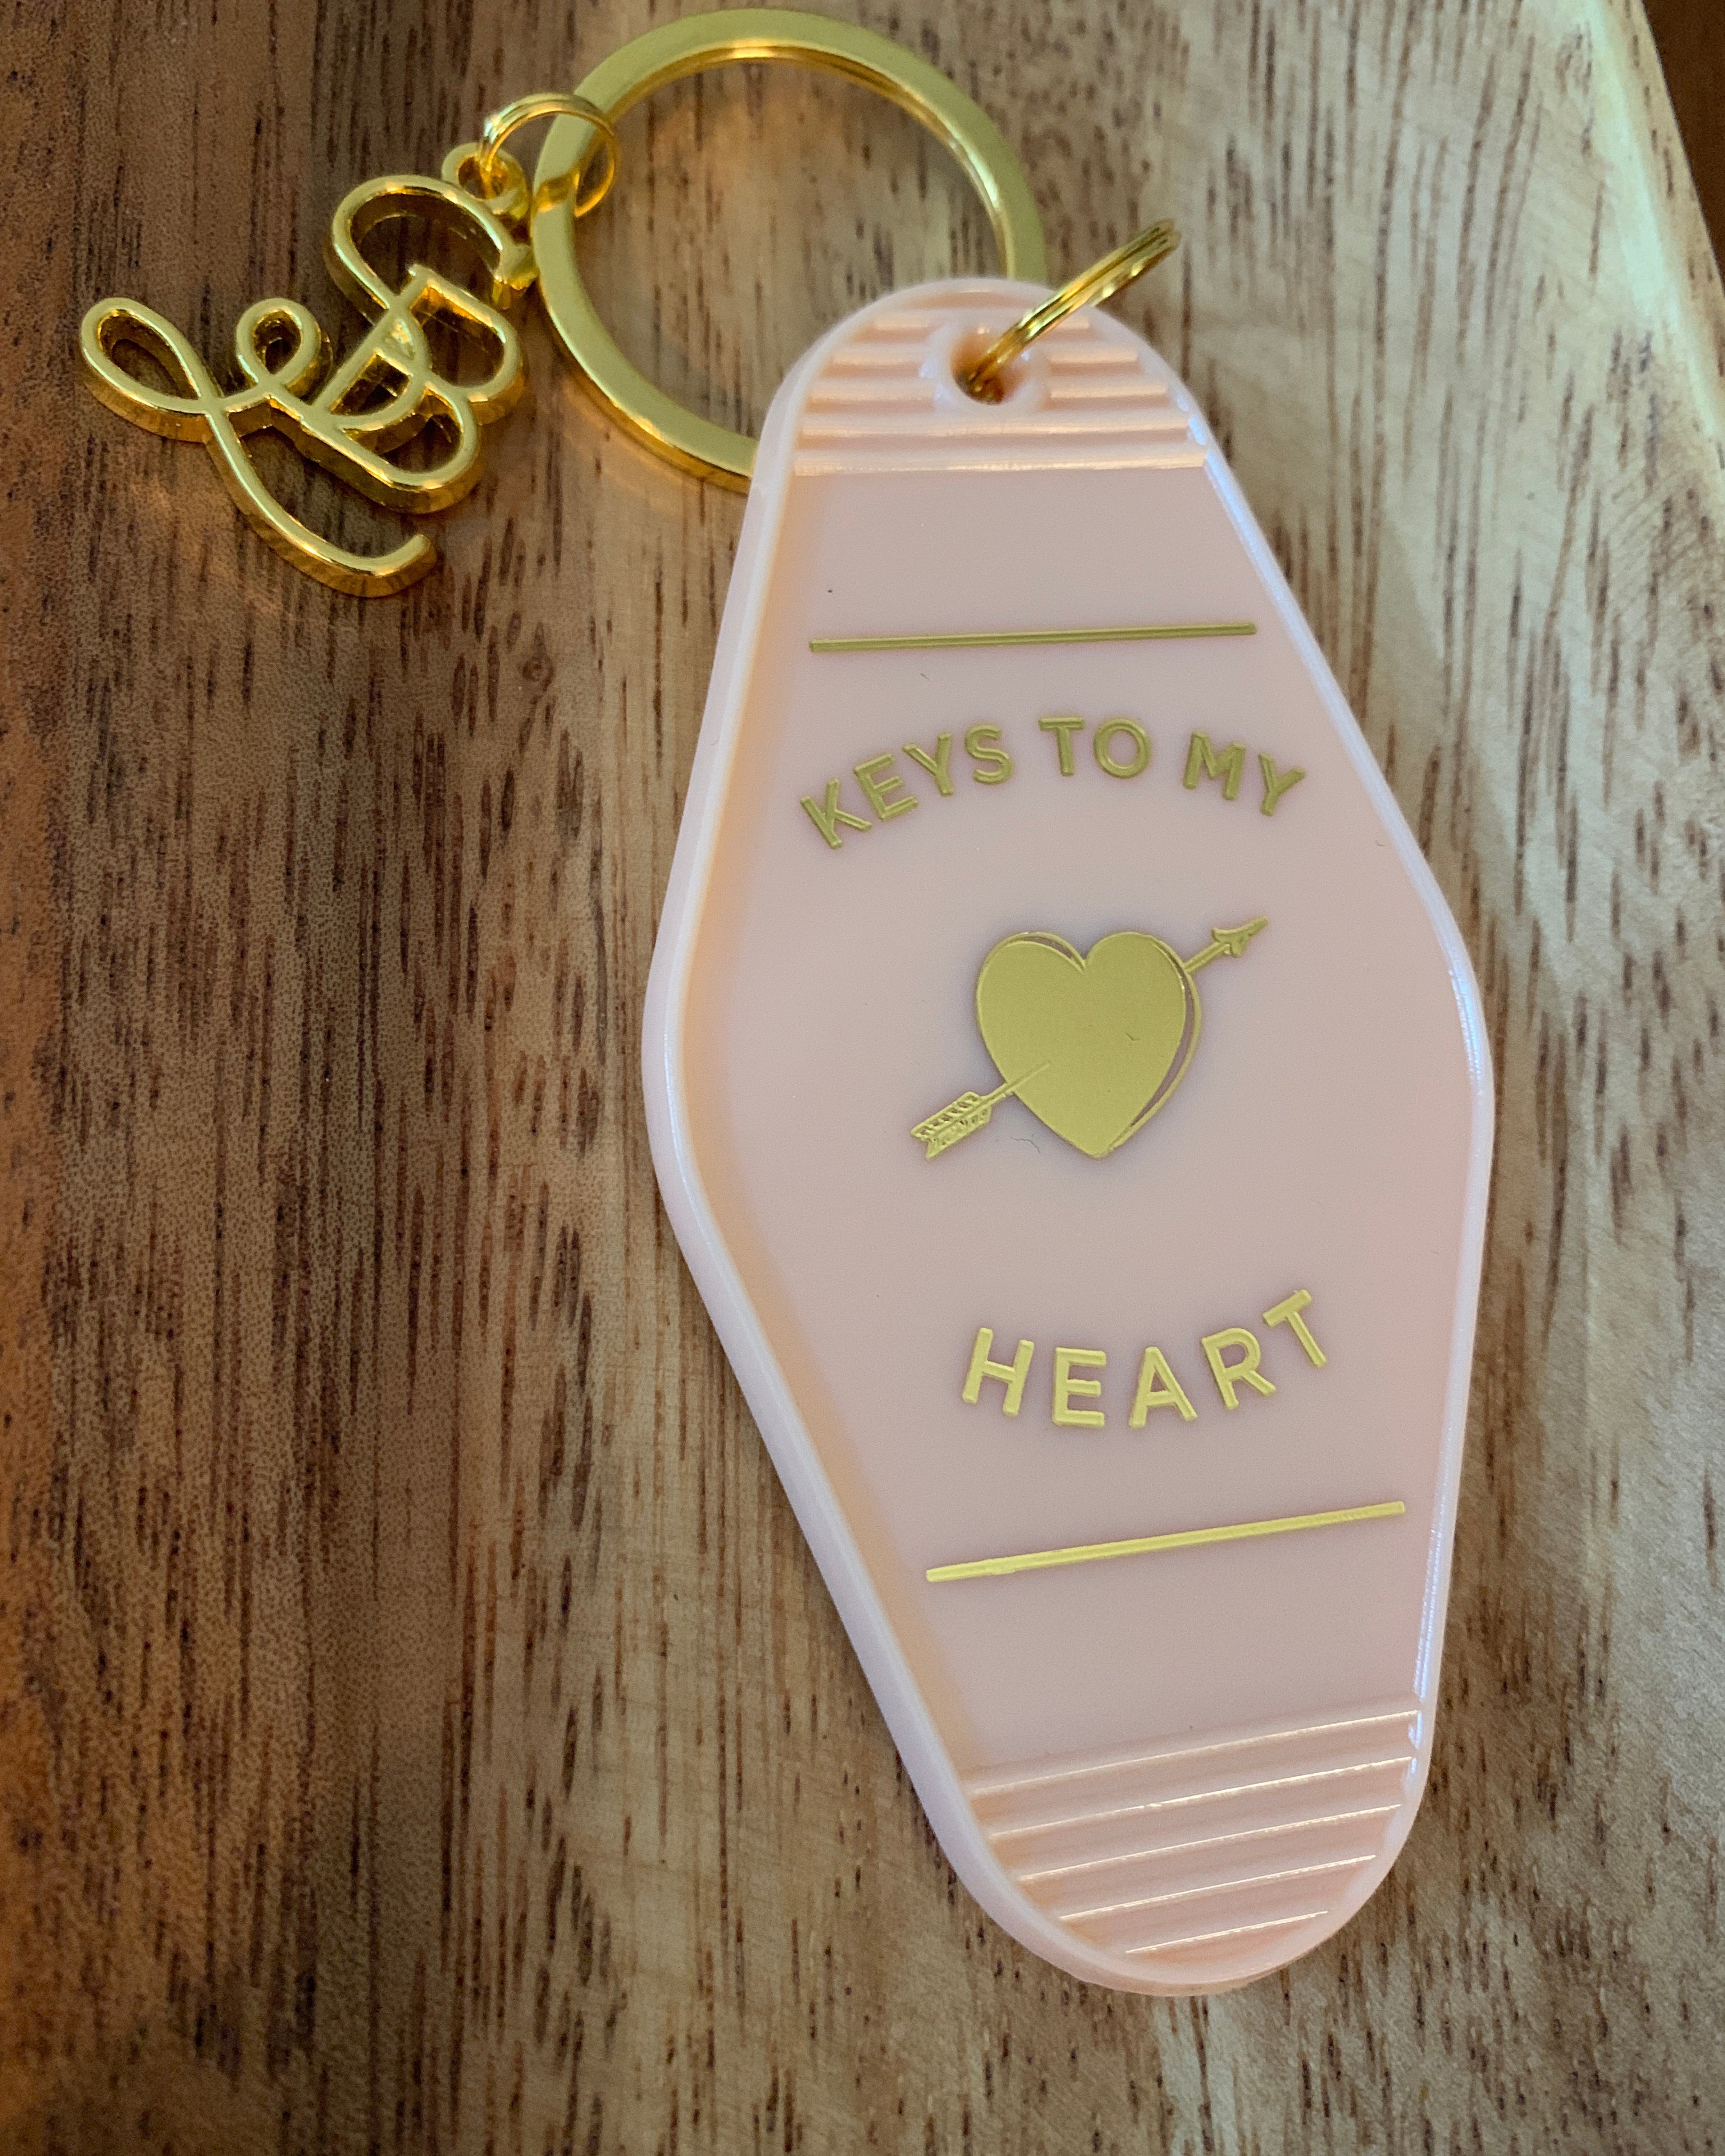 Keys To My Heart - Motel Key Tag.